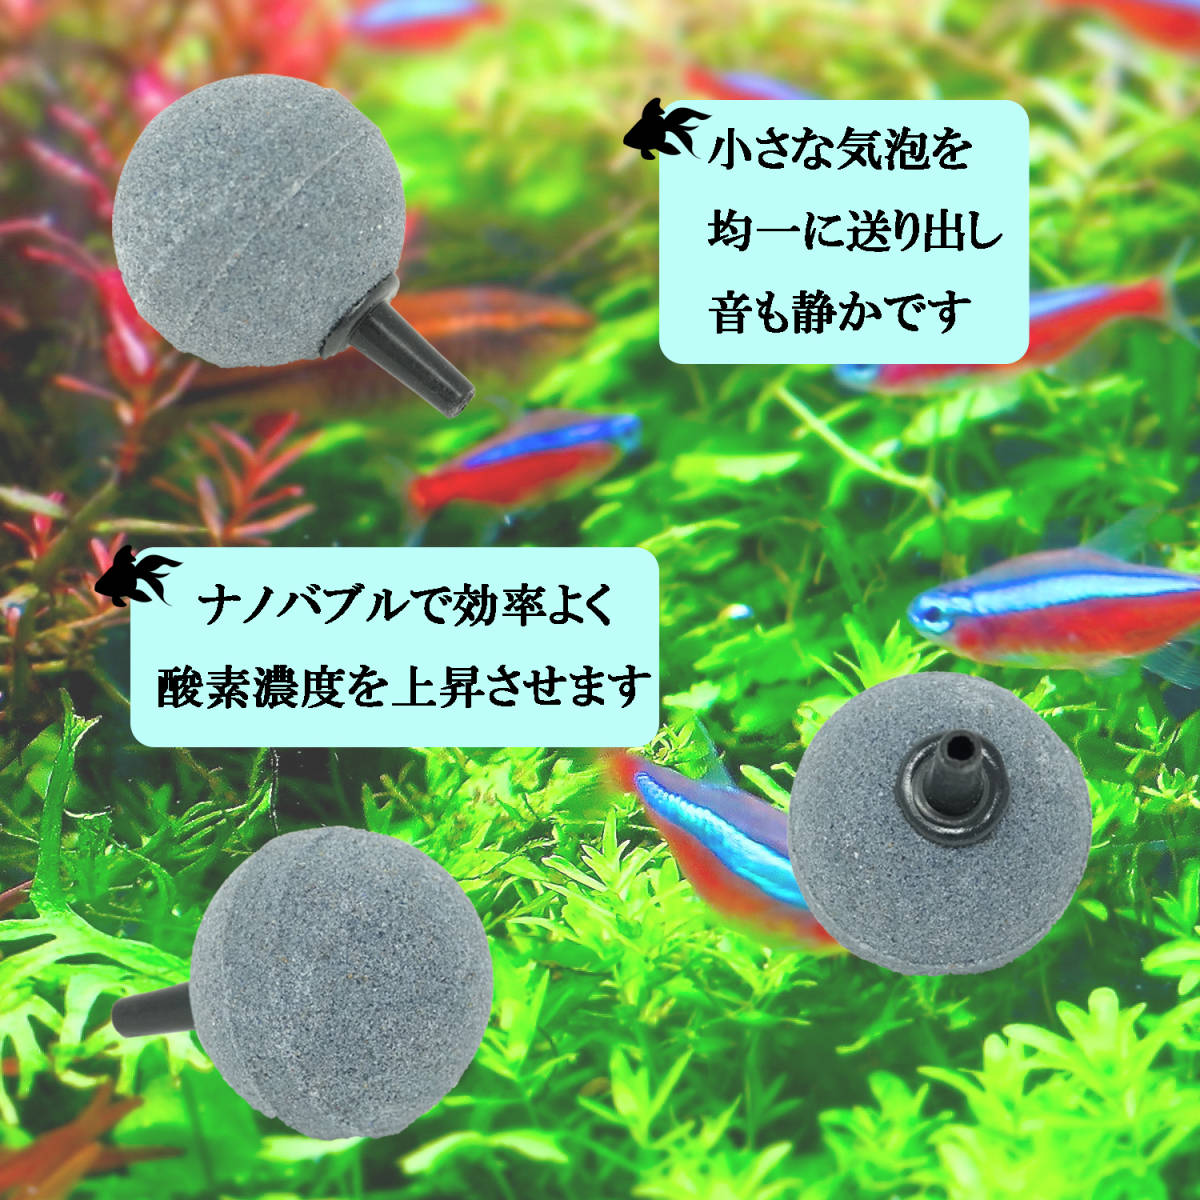  air Stone *30mm sphere ~30 piece set ~bkbk air Stone tropical fish medaka golgfish oxygen supply .